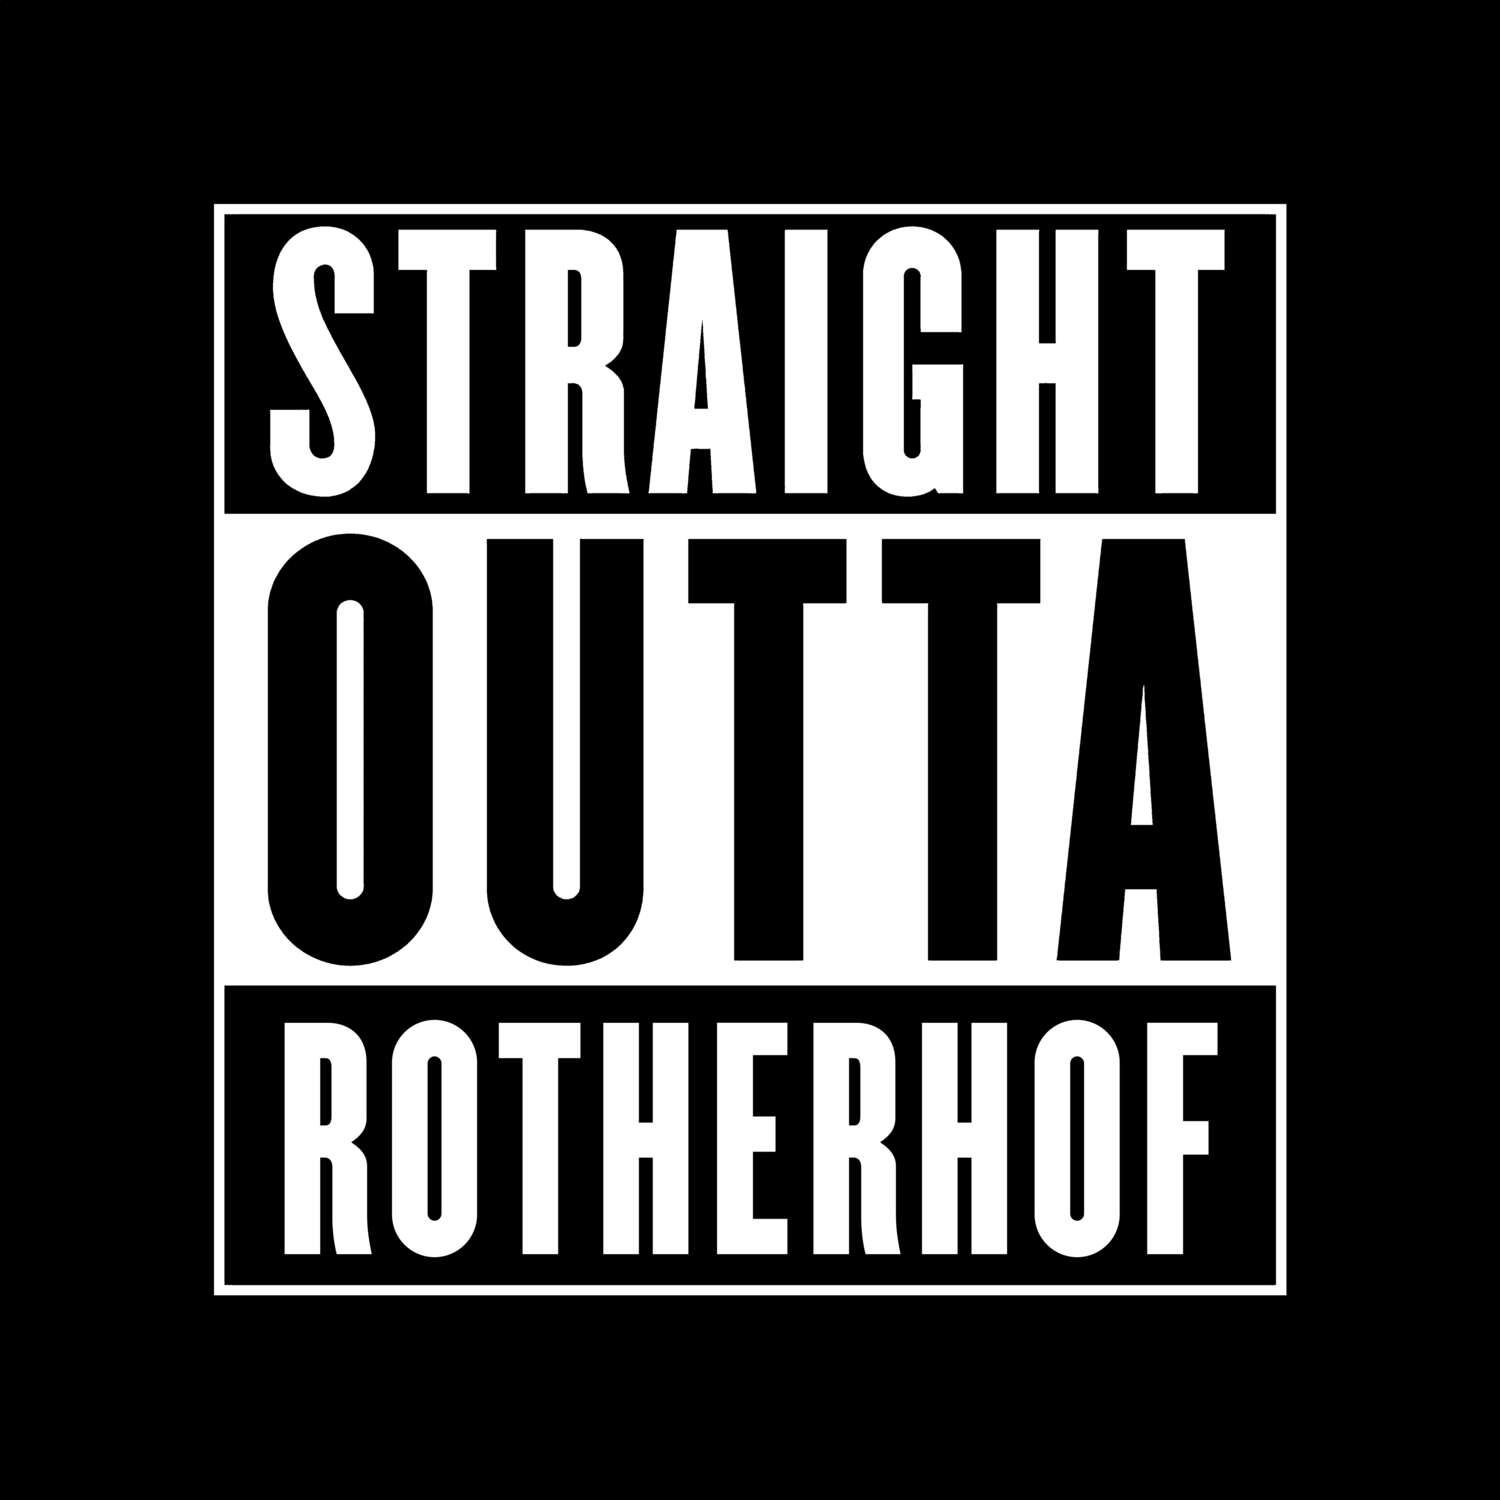 Rotherhof T-Shirt »Straight Outta«